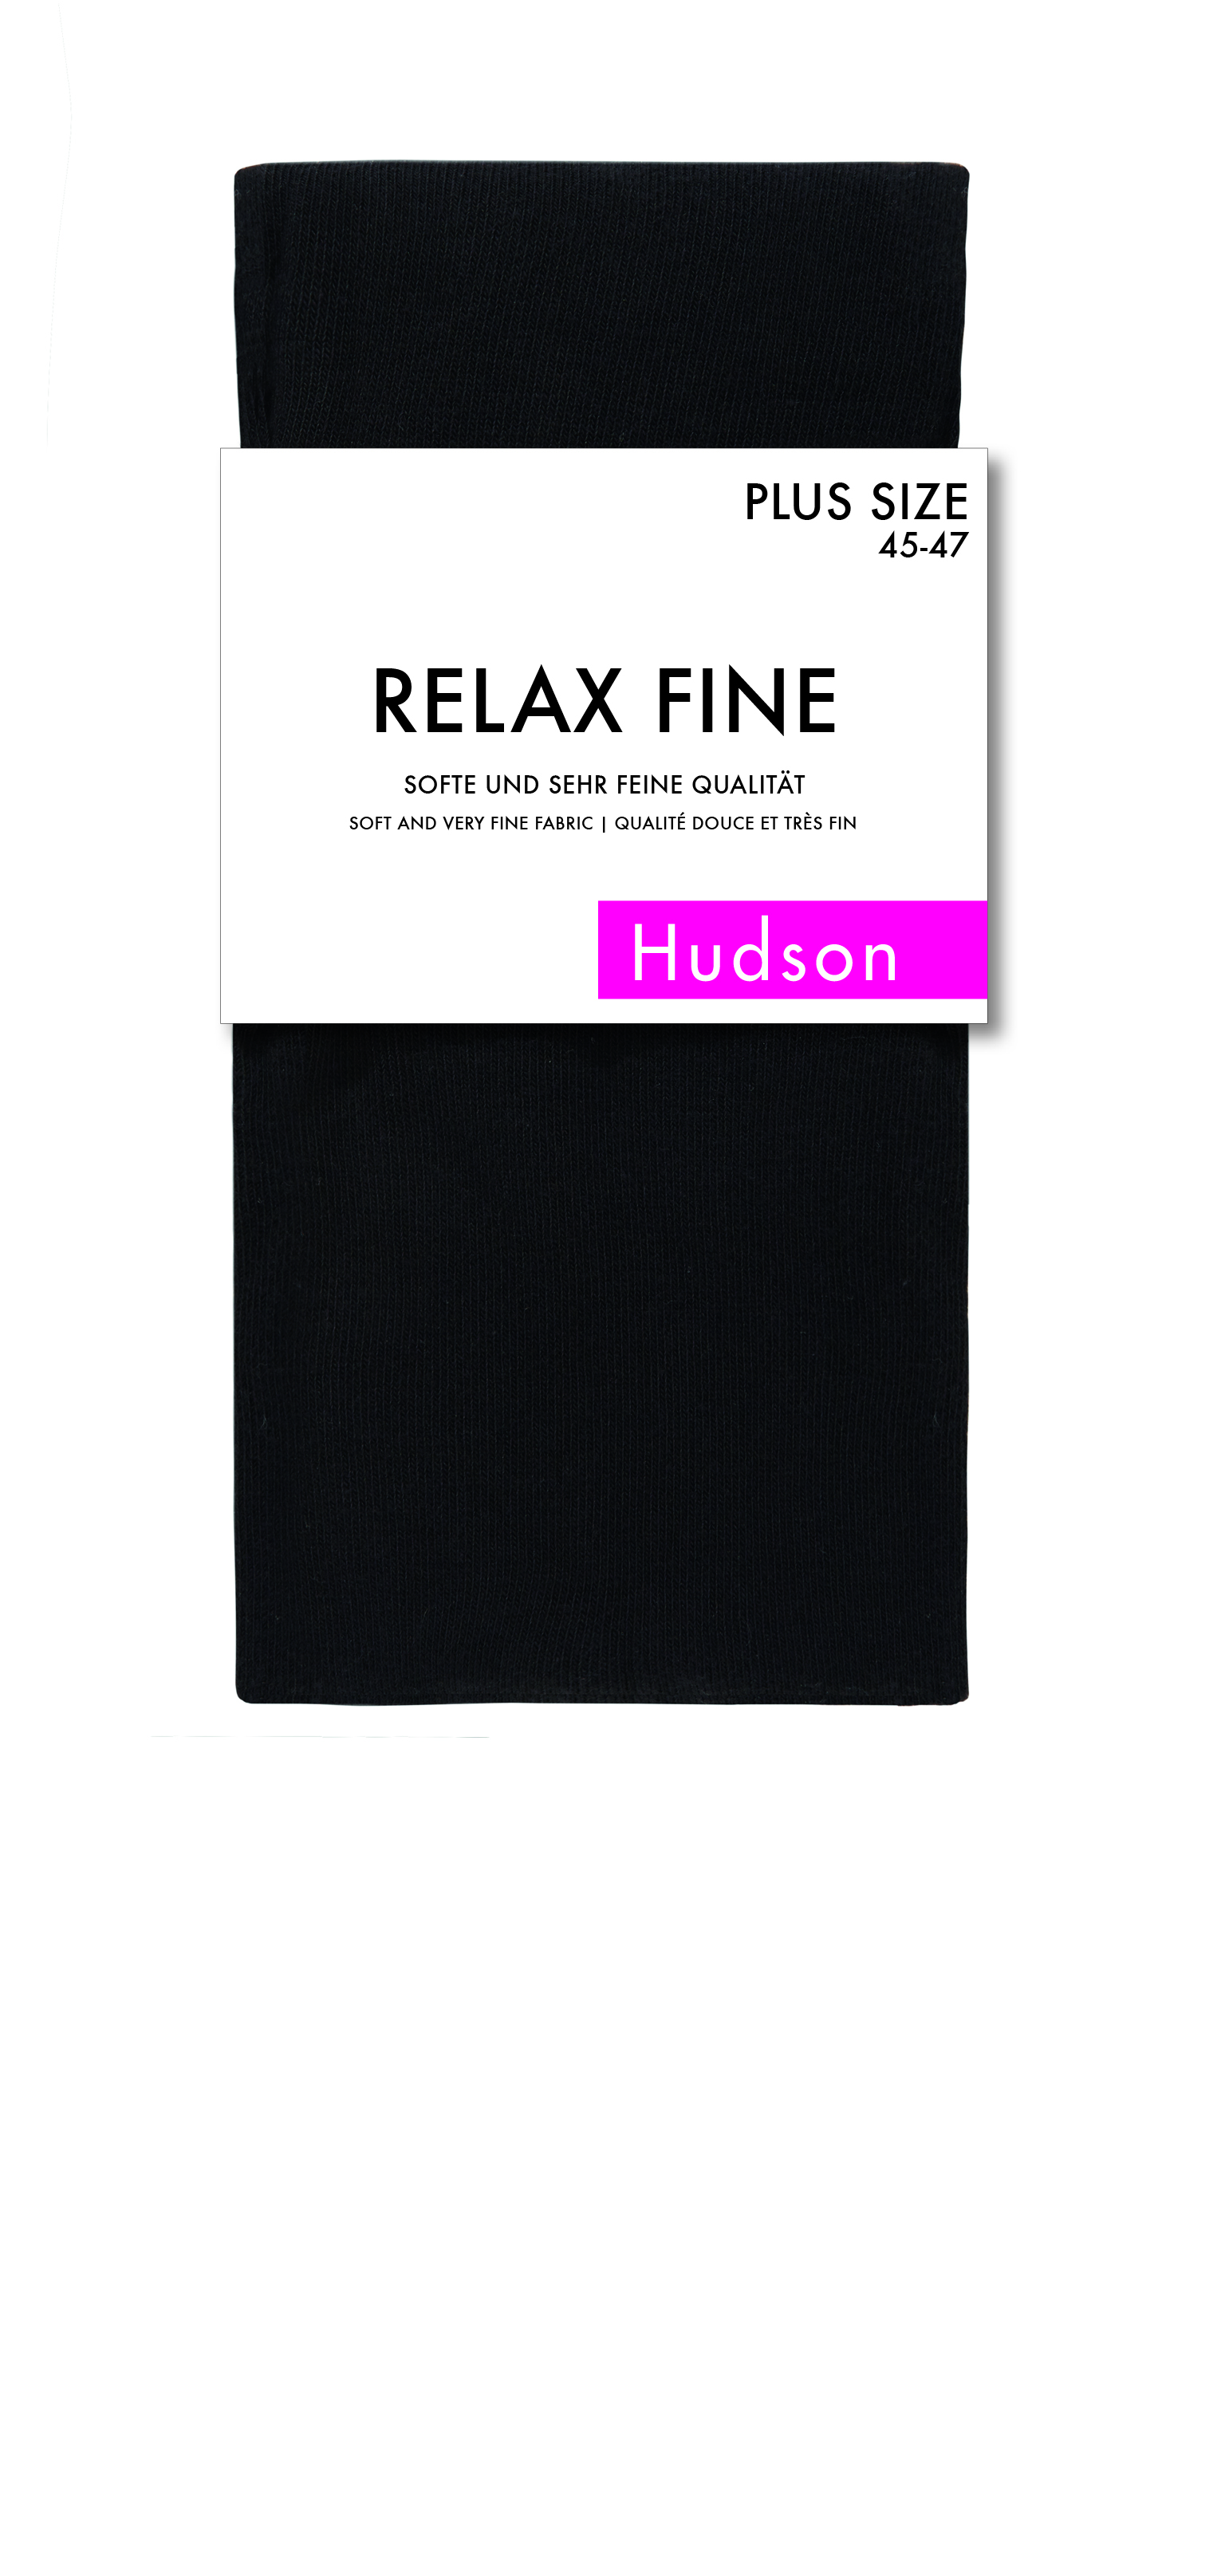 Hudson Relax Fine Plus Size Strumpfhose